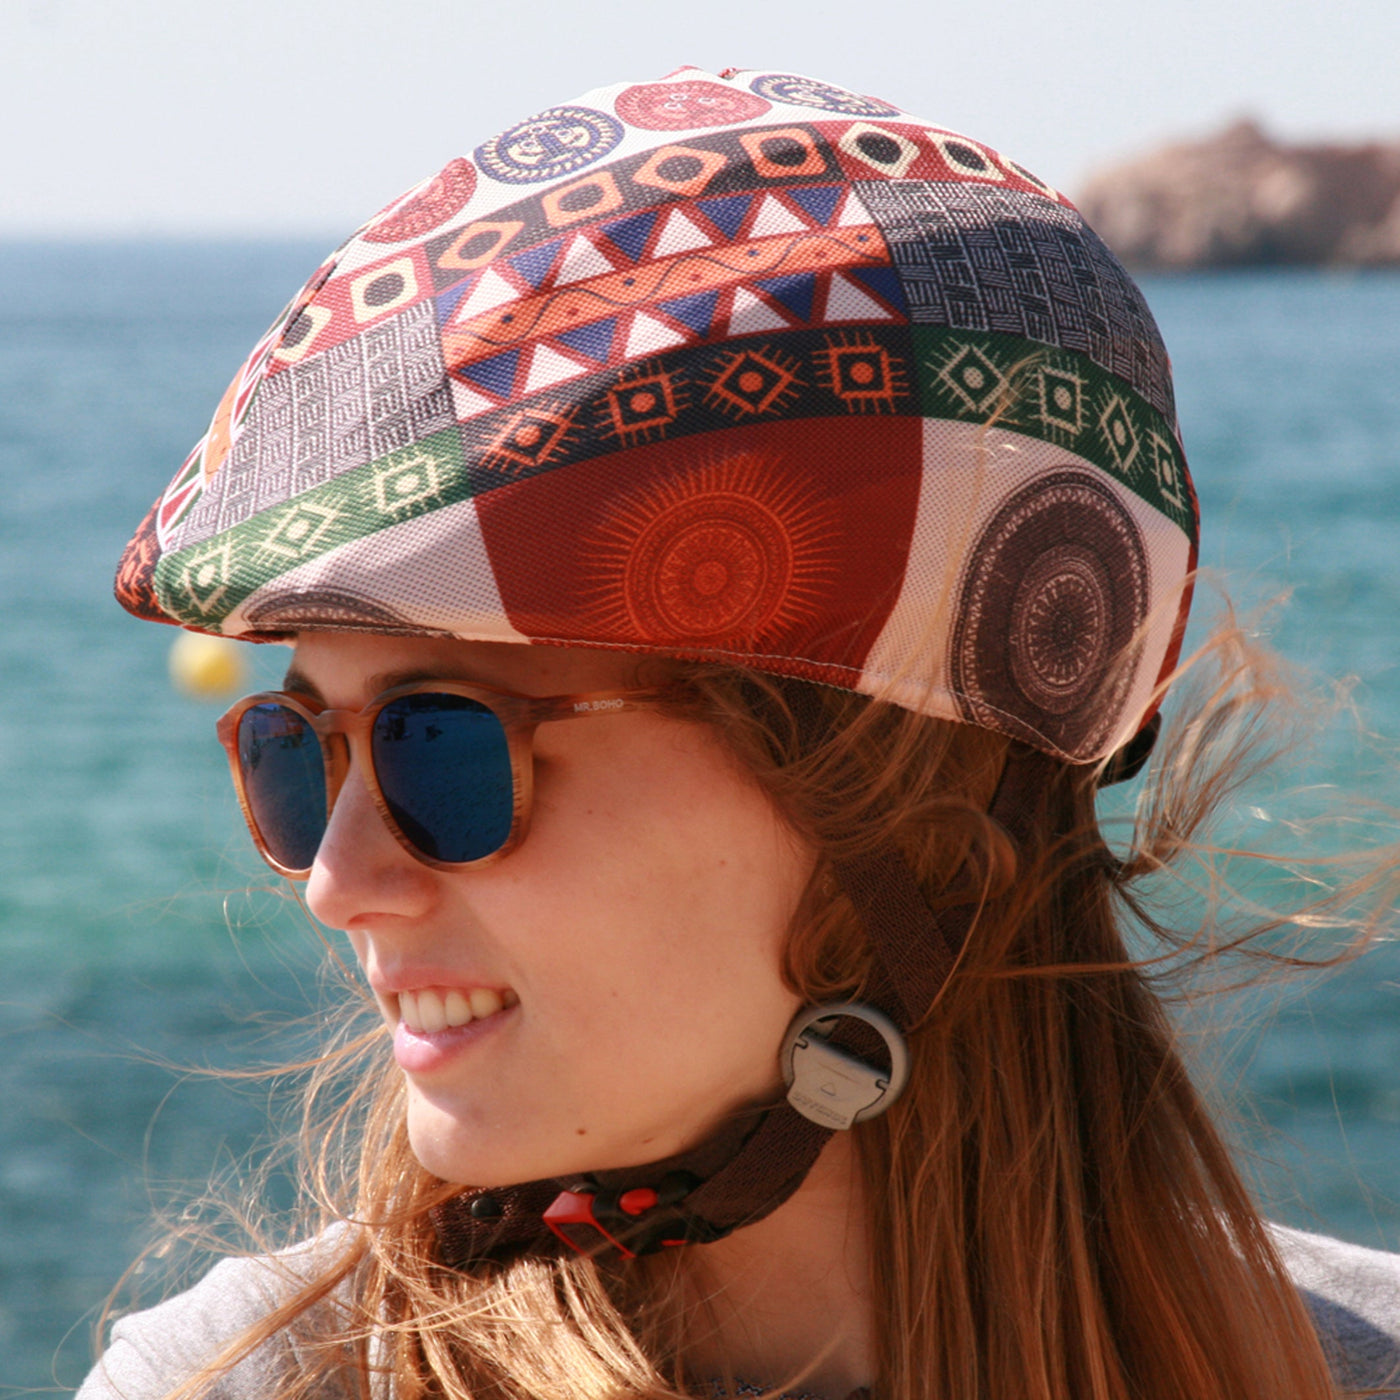 Coolcasc Bike Helmet Cover Aztecta.